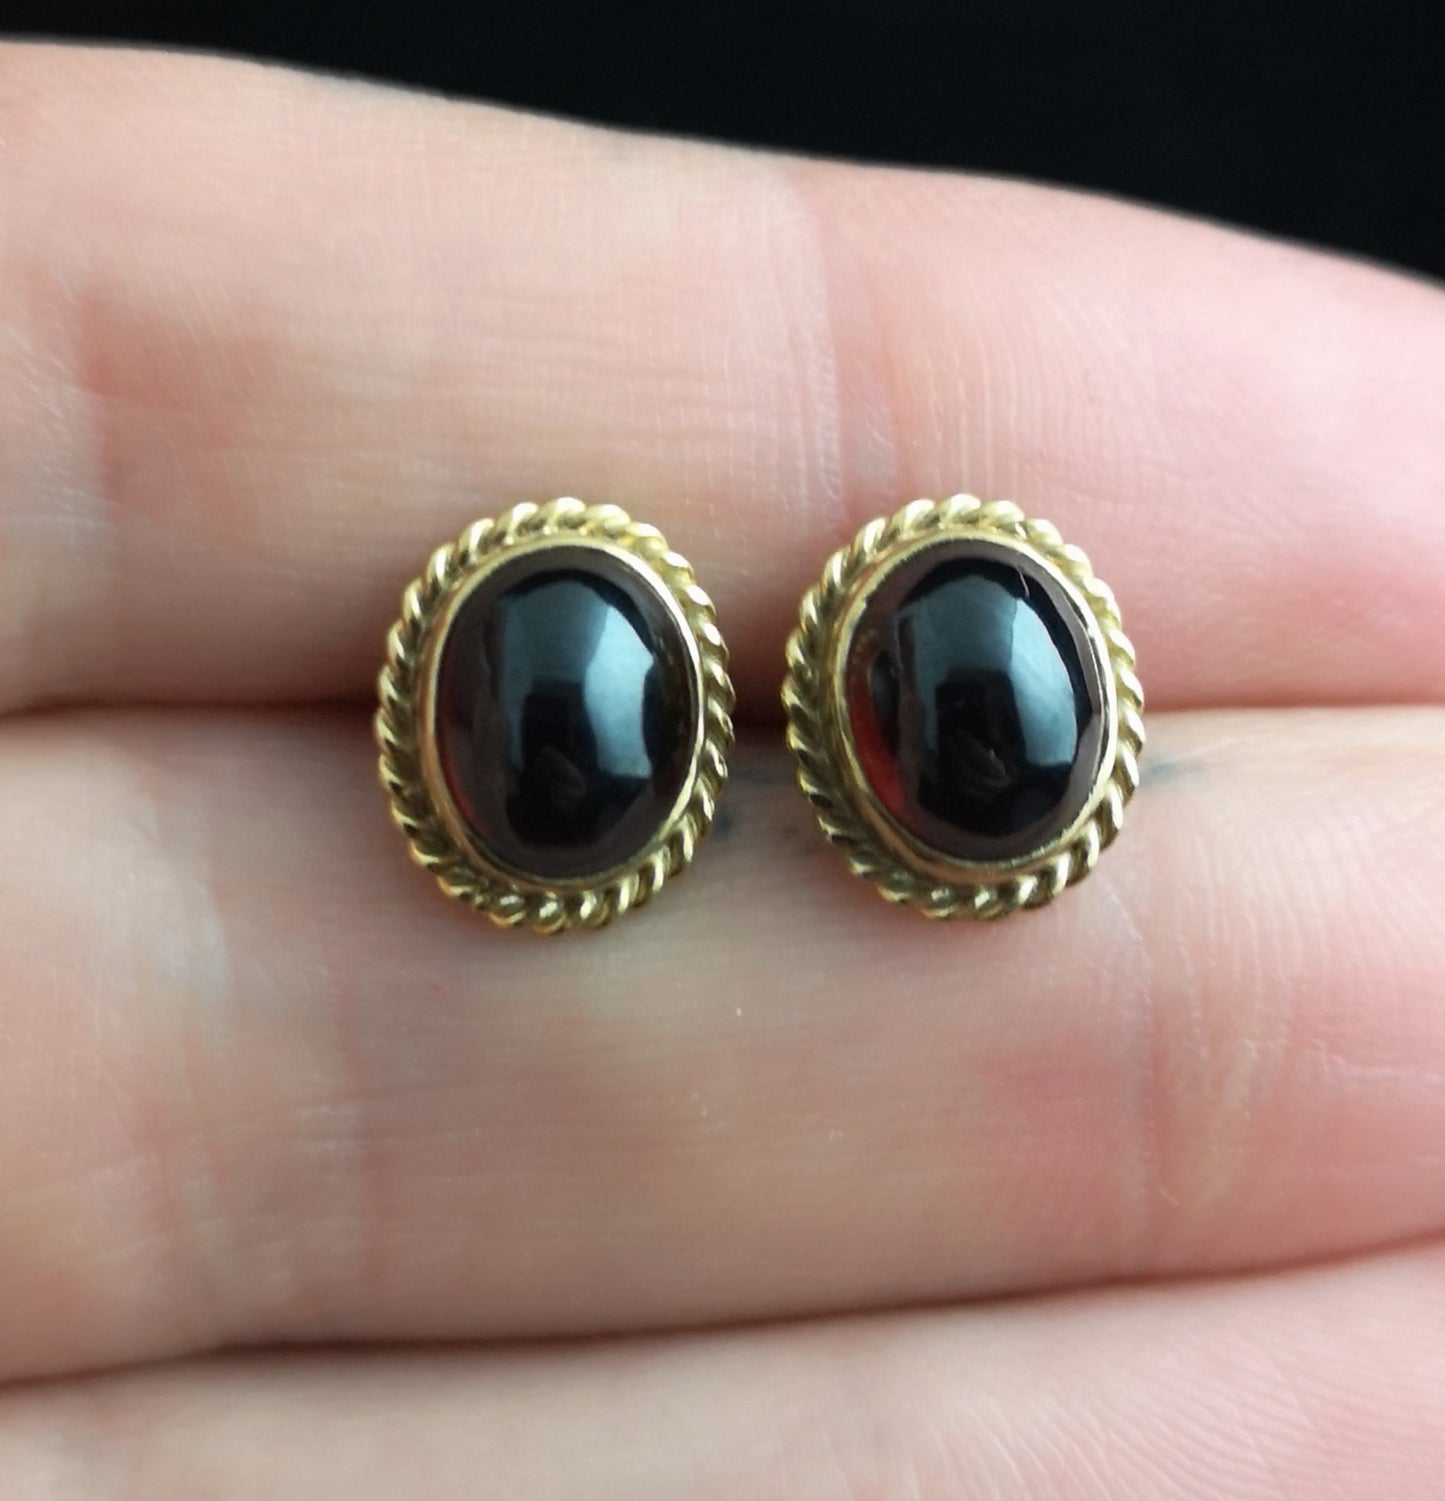 Victorian garnet cabochon earrings, 9ct gold